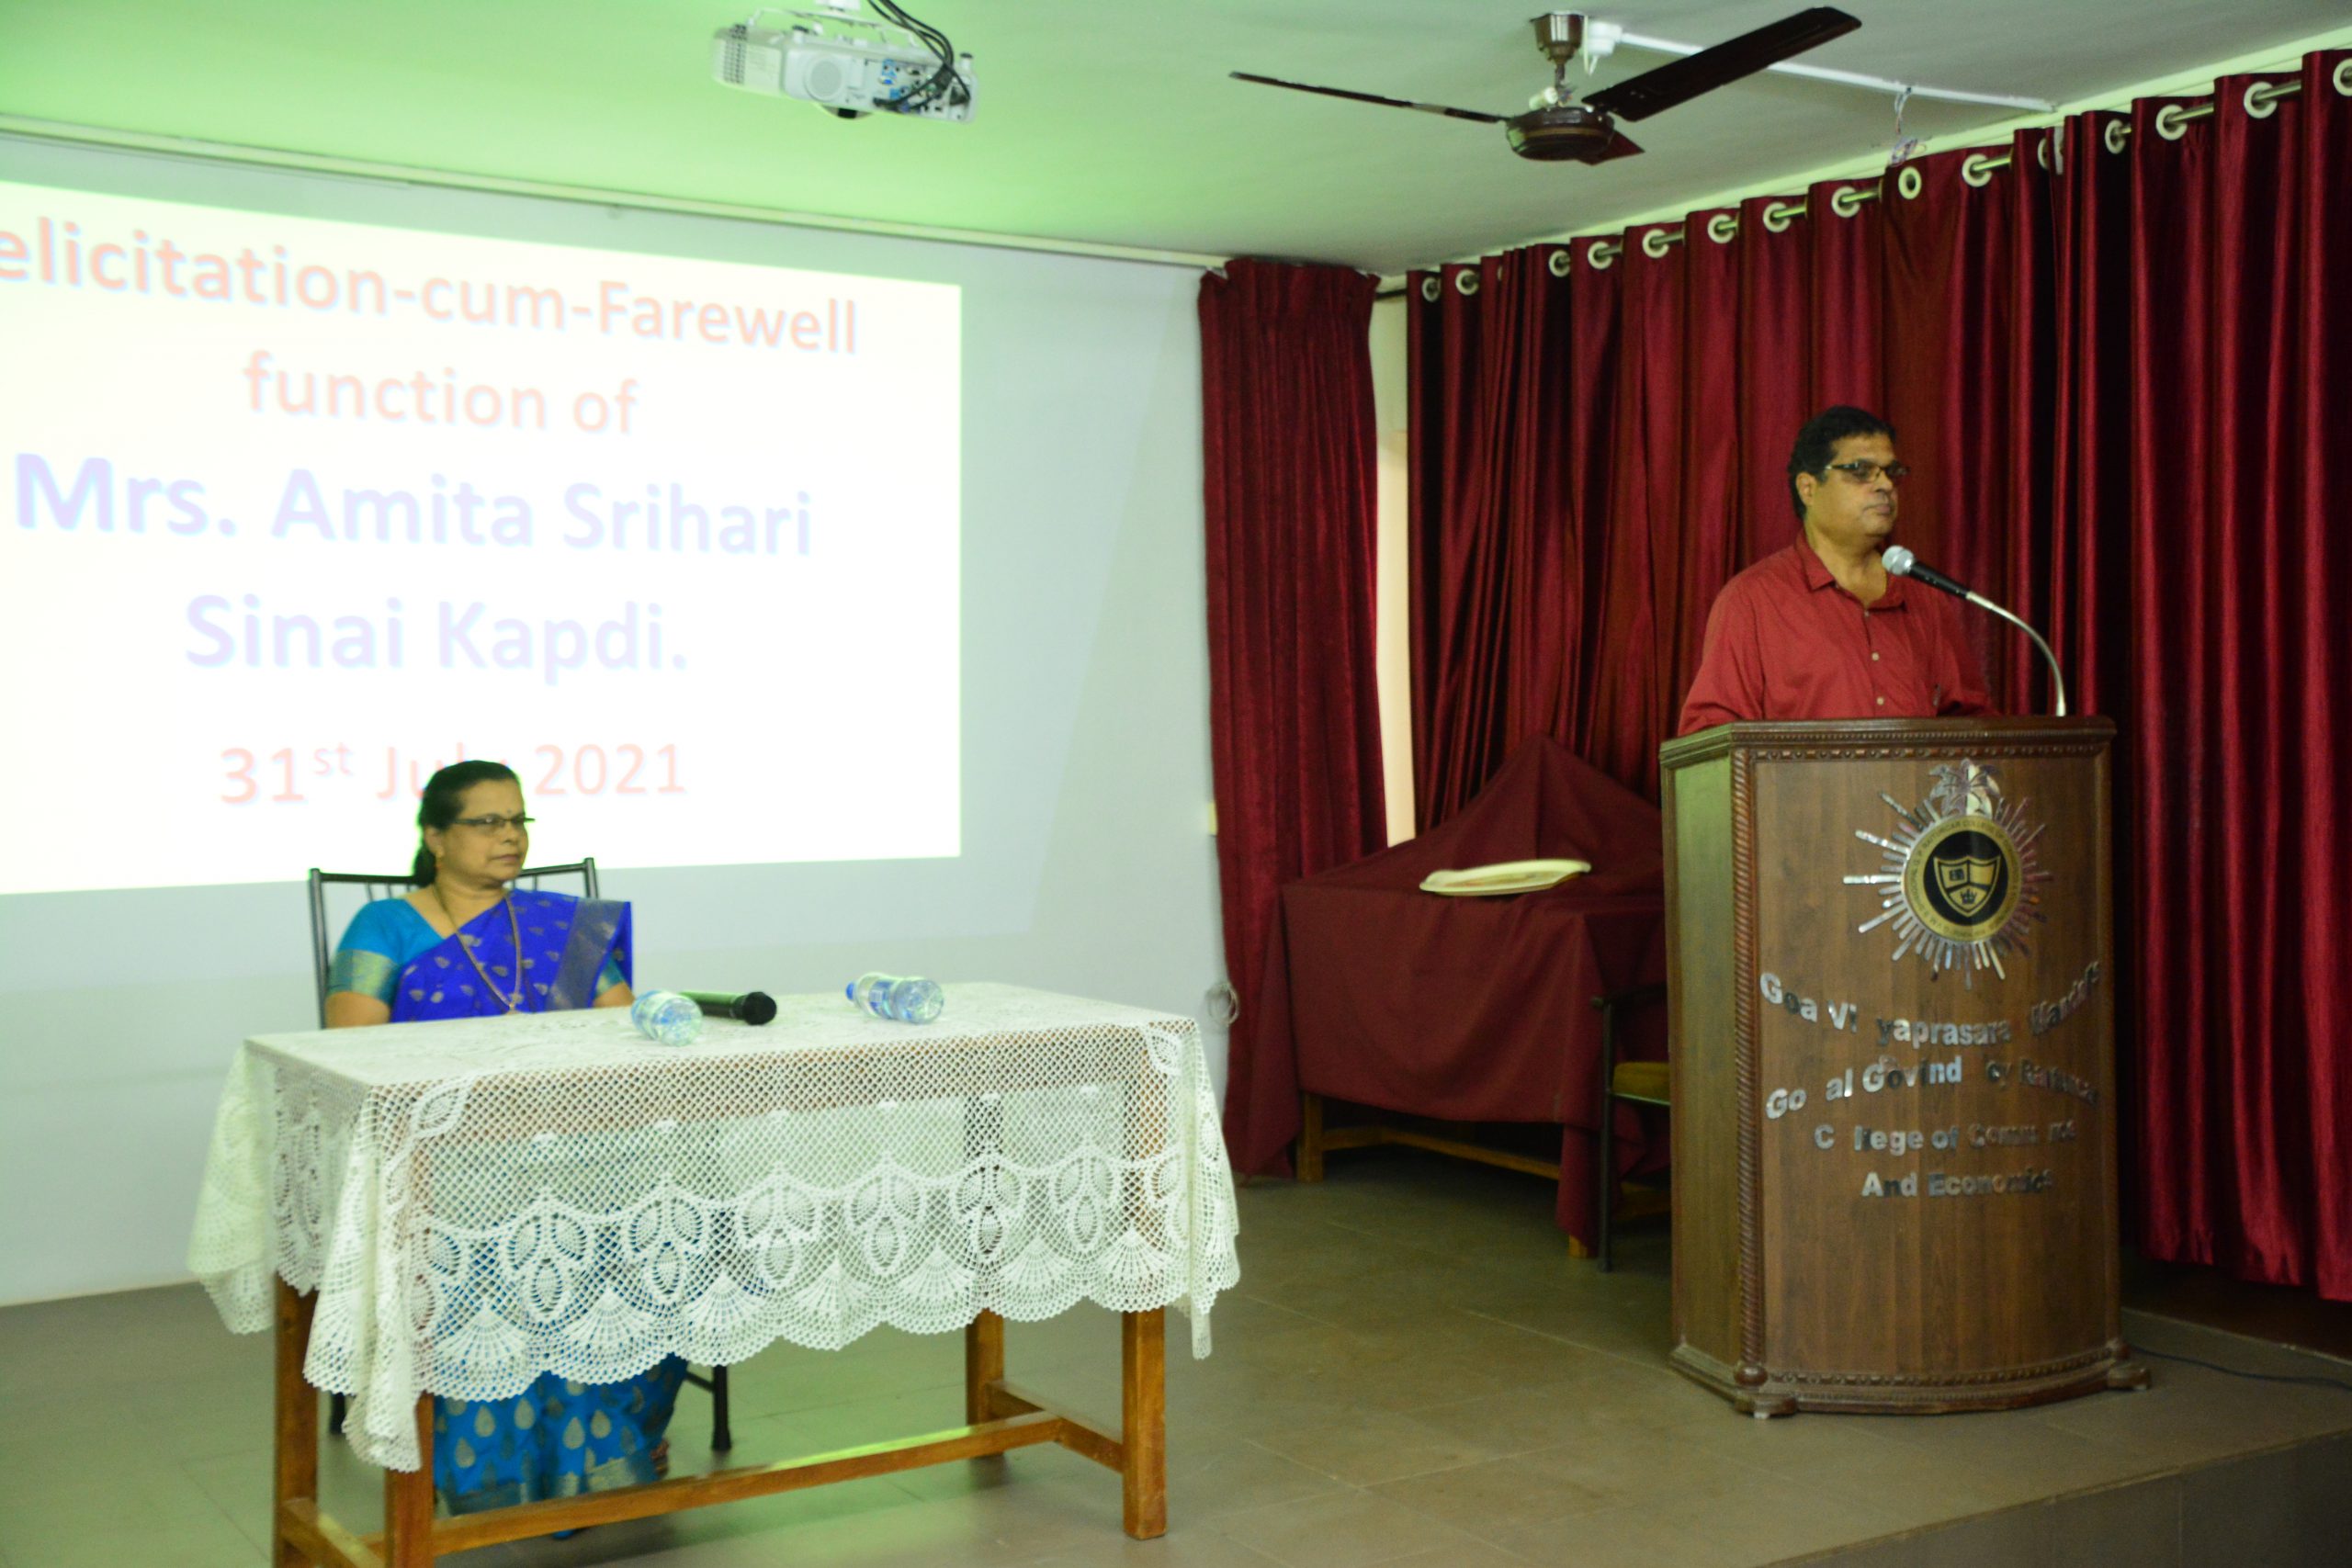 Felicitation-cum-Farewell function of Mrs. Amita Kapdi